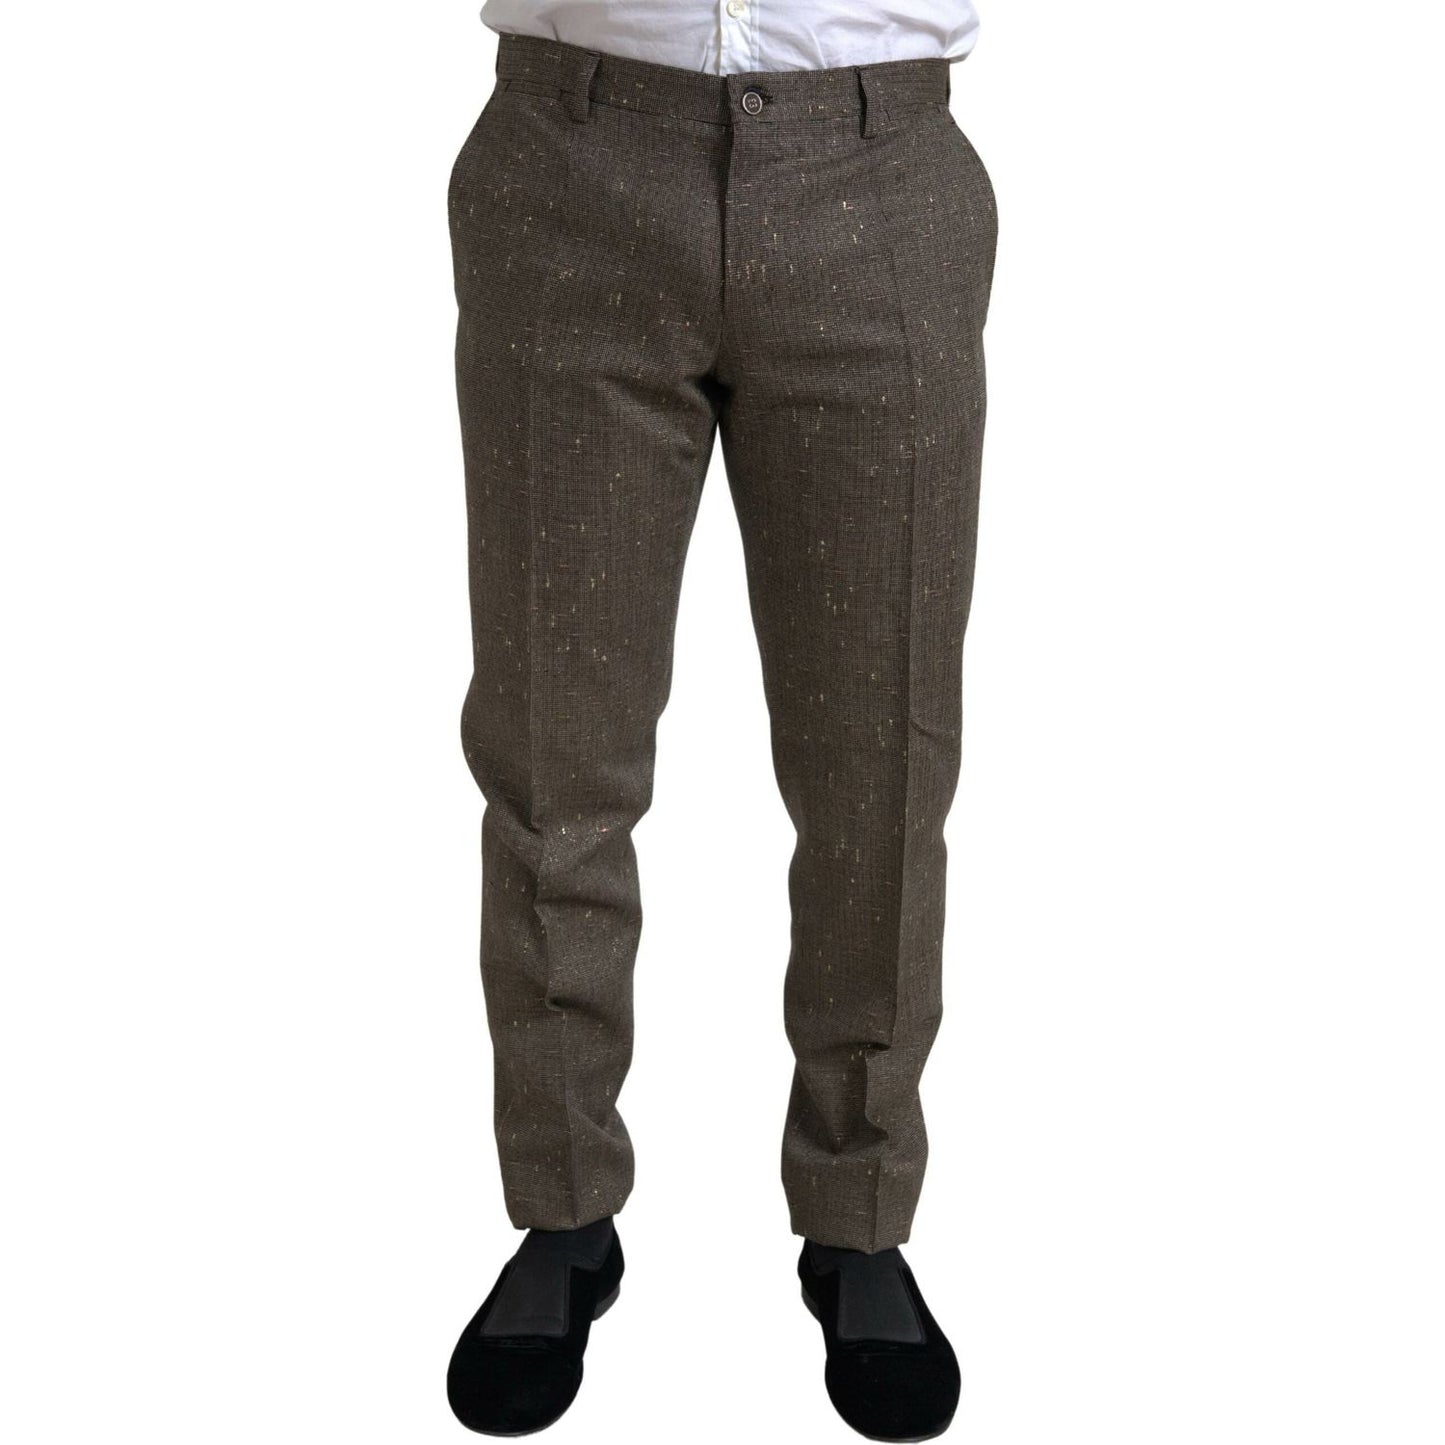 Dolce & Gabbana Elegant Skinny Wool Chino Pants brown-wool-dress-skinny-men-trouser-pants 465A9111bg-scaled-91b1f1b3-ad5.jpg